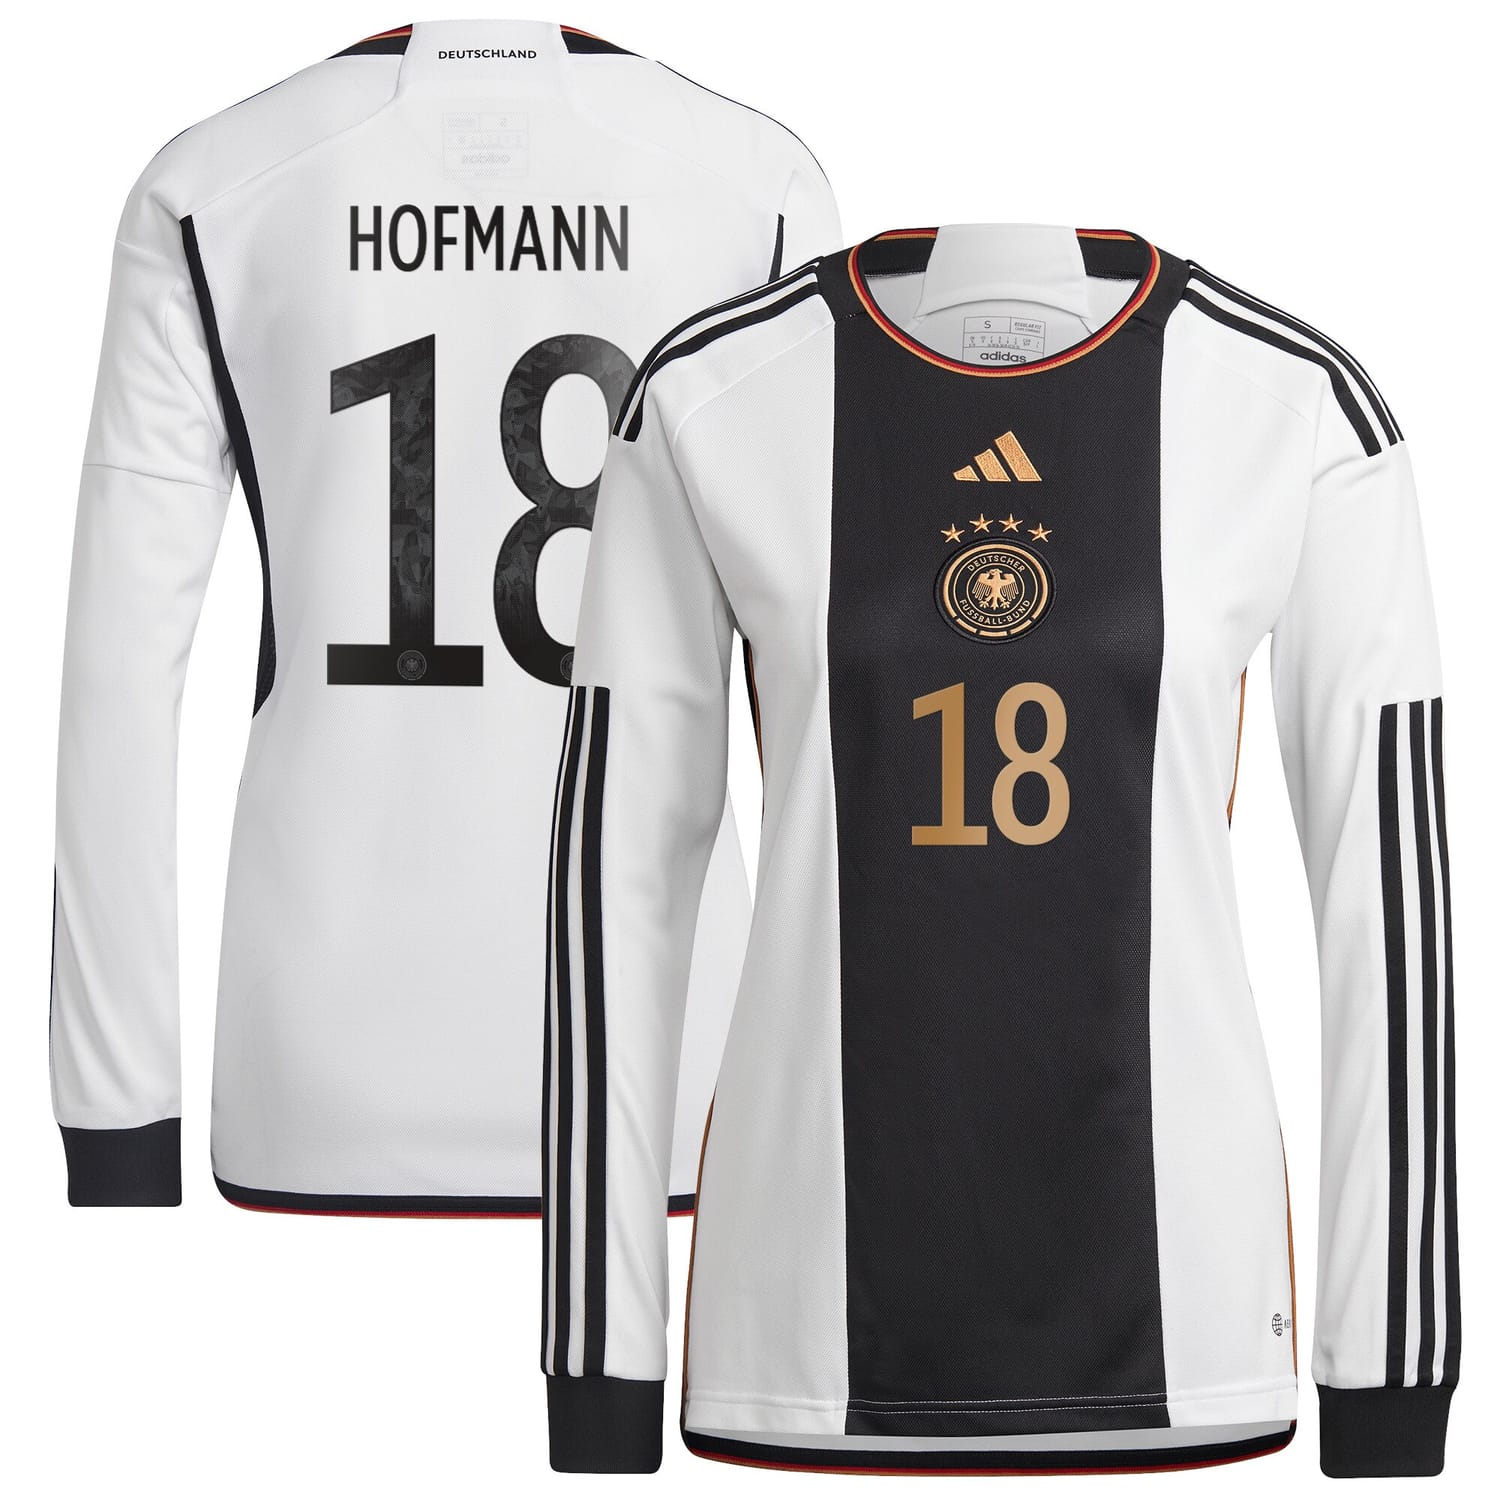 Germany National Team Home Jersey Shirt Long Sleeve player Jonas Hofmann 18 printing for Women